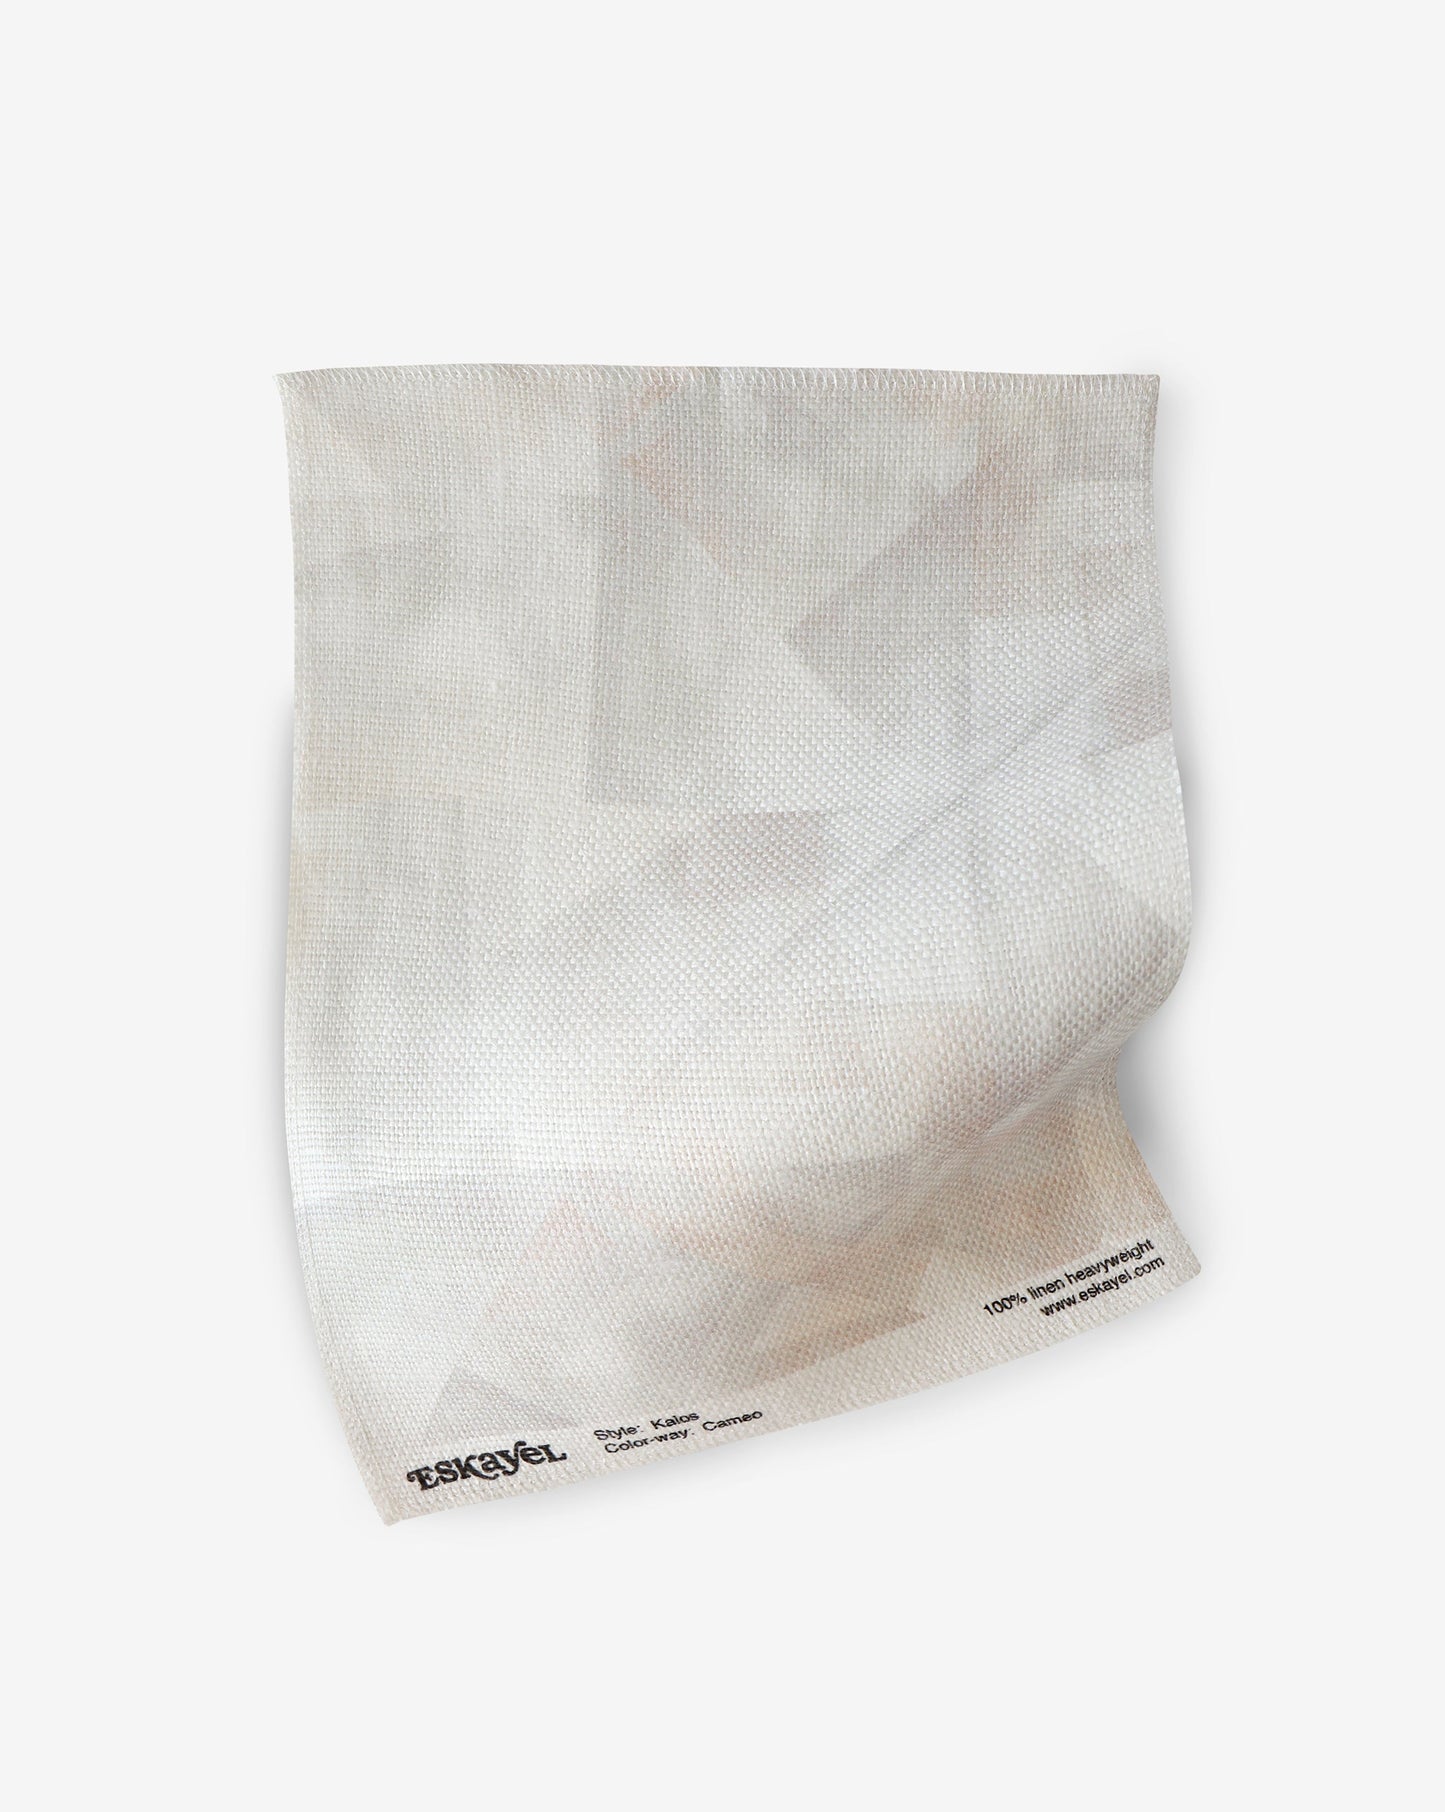 A Kalos Fabric Cameo napkin on a background